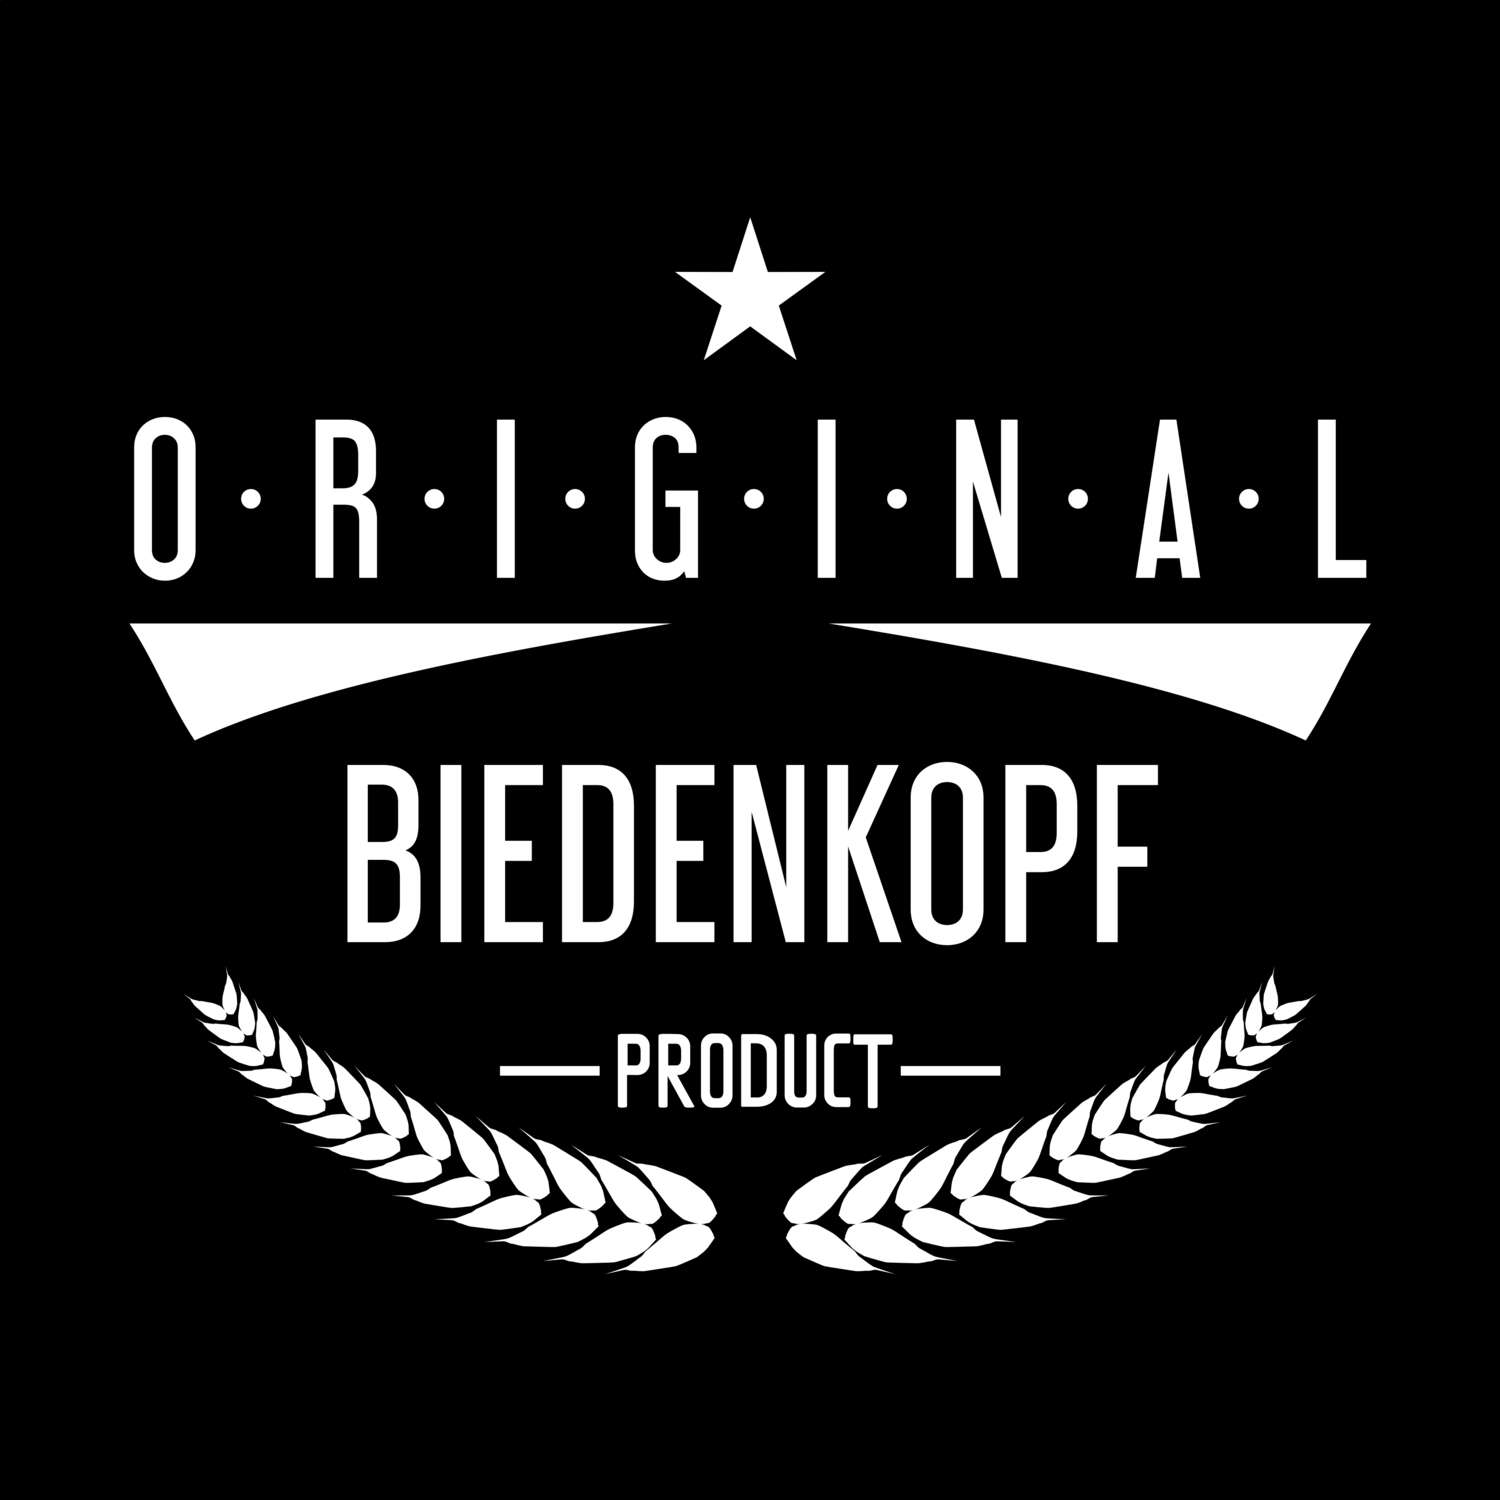 Biedenkopf T-Shirt »Original Product«